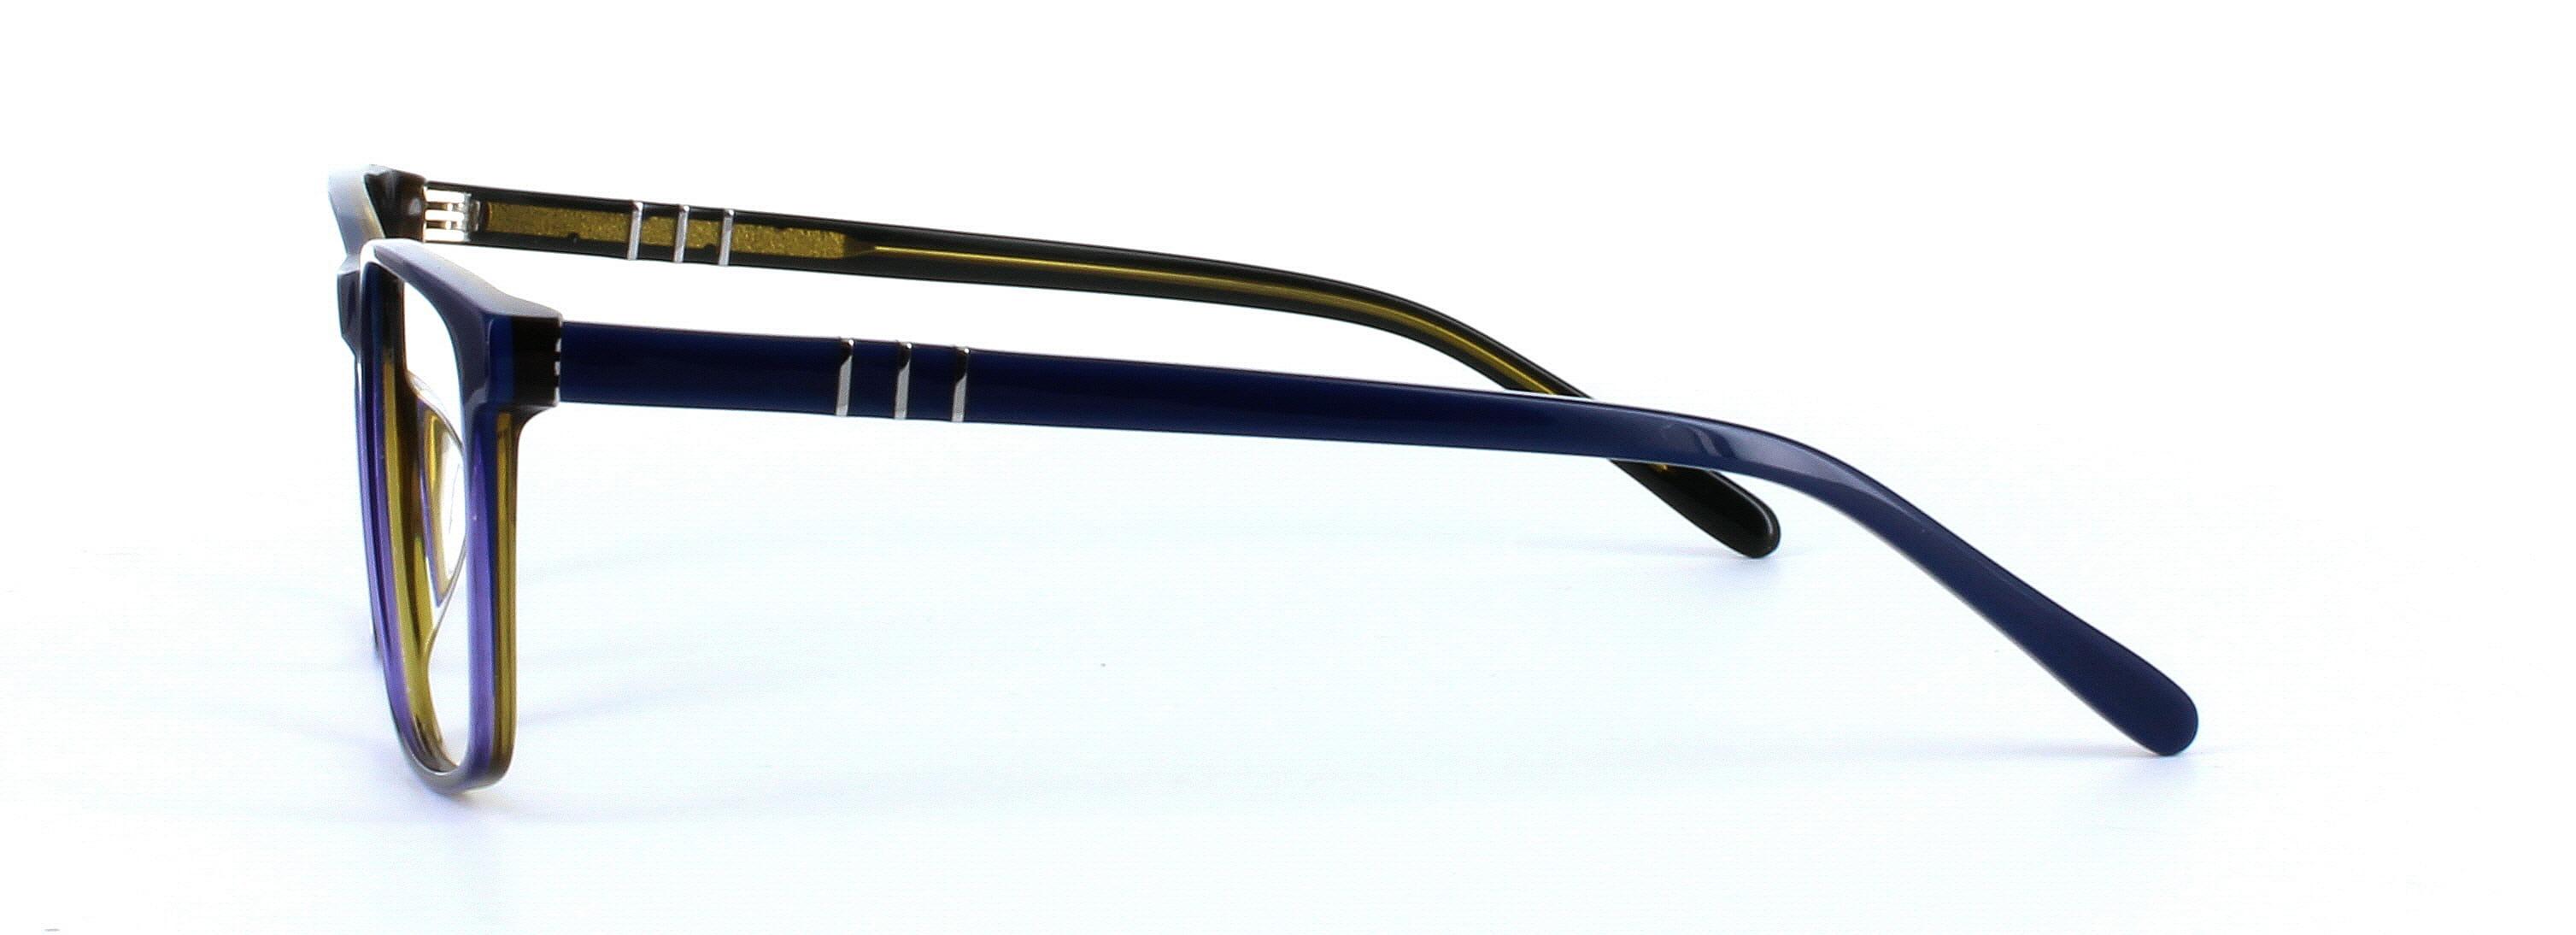 Bayley Lane Purple Full Rim Rectangular Acetate Glasses - Image View 2